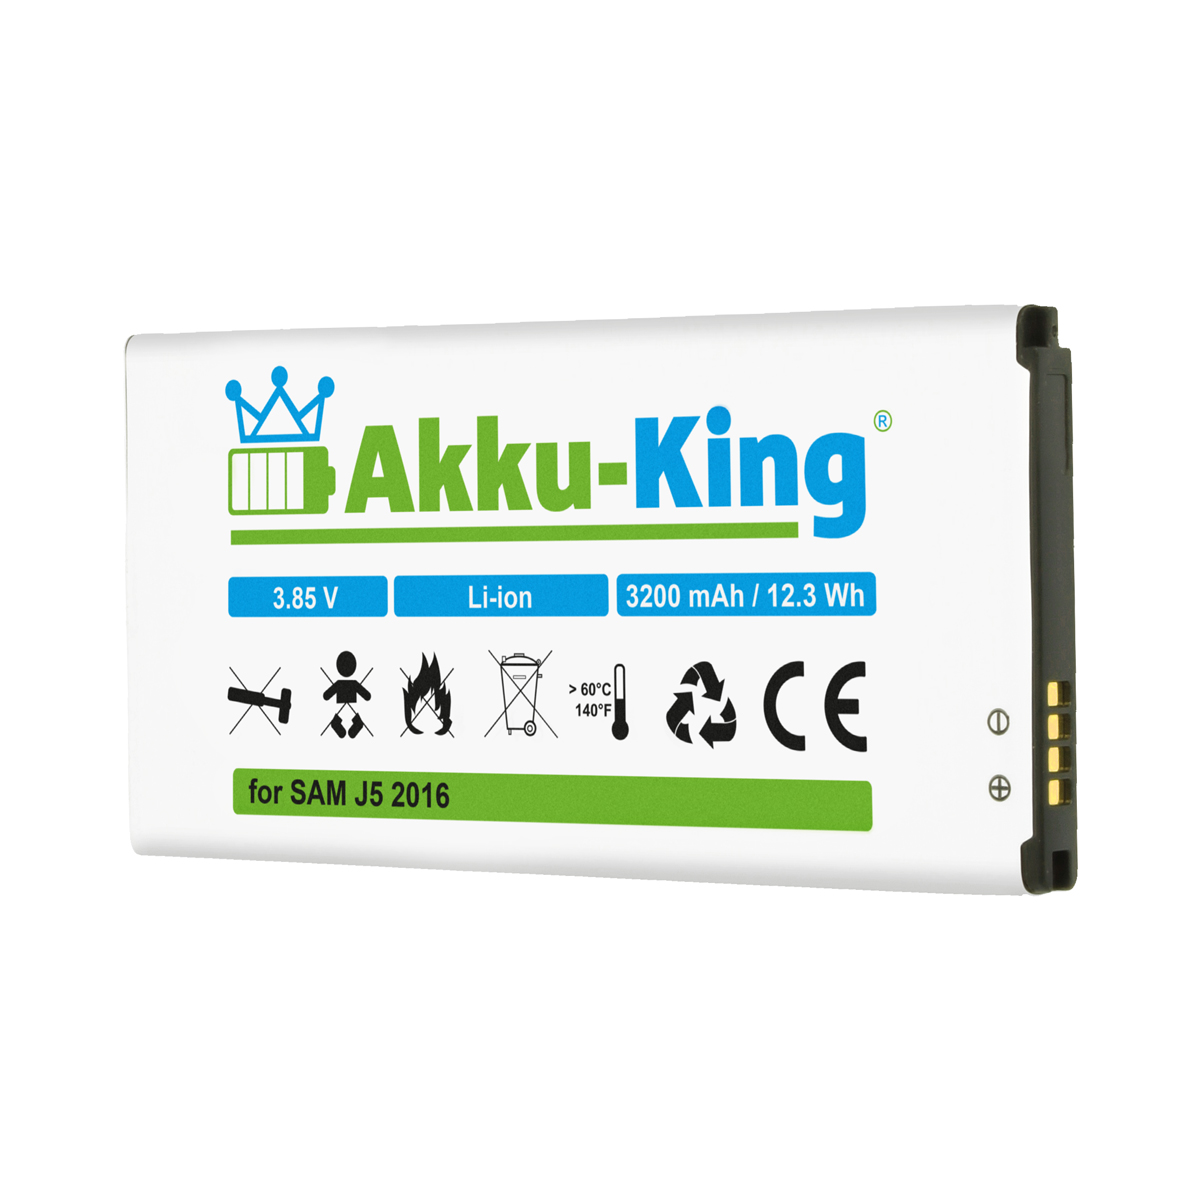 Akku Samsung AKKU-KING Li-Ion mit 3.85 Volt, EB-BJ510CBC Handy-Akku, 3200mAh kompatibel